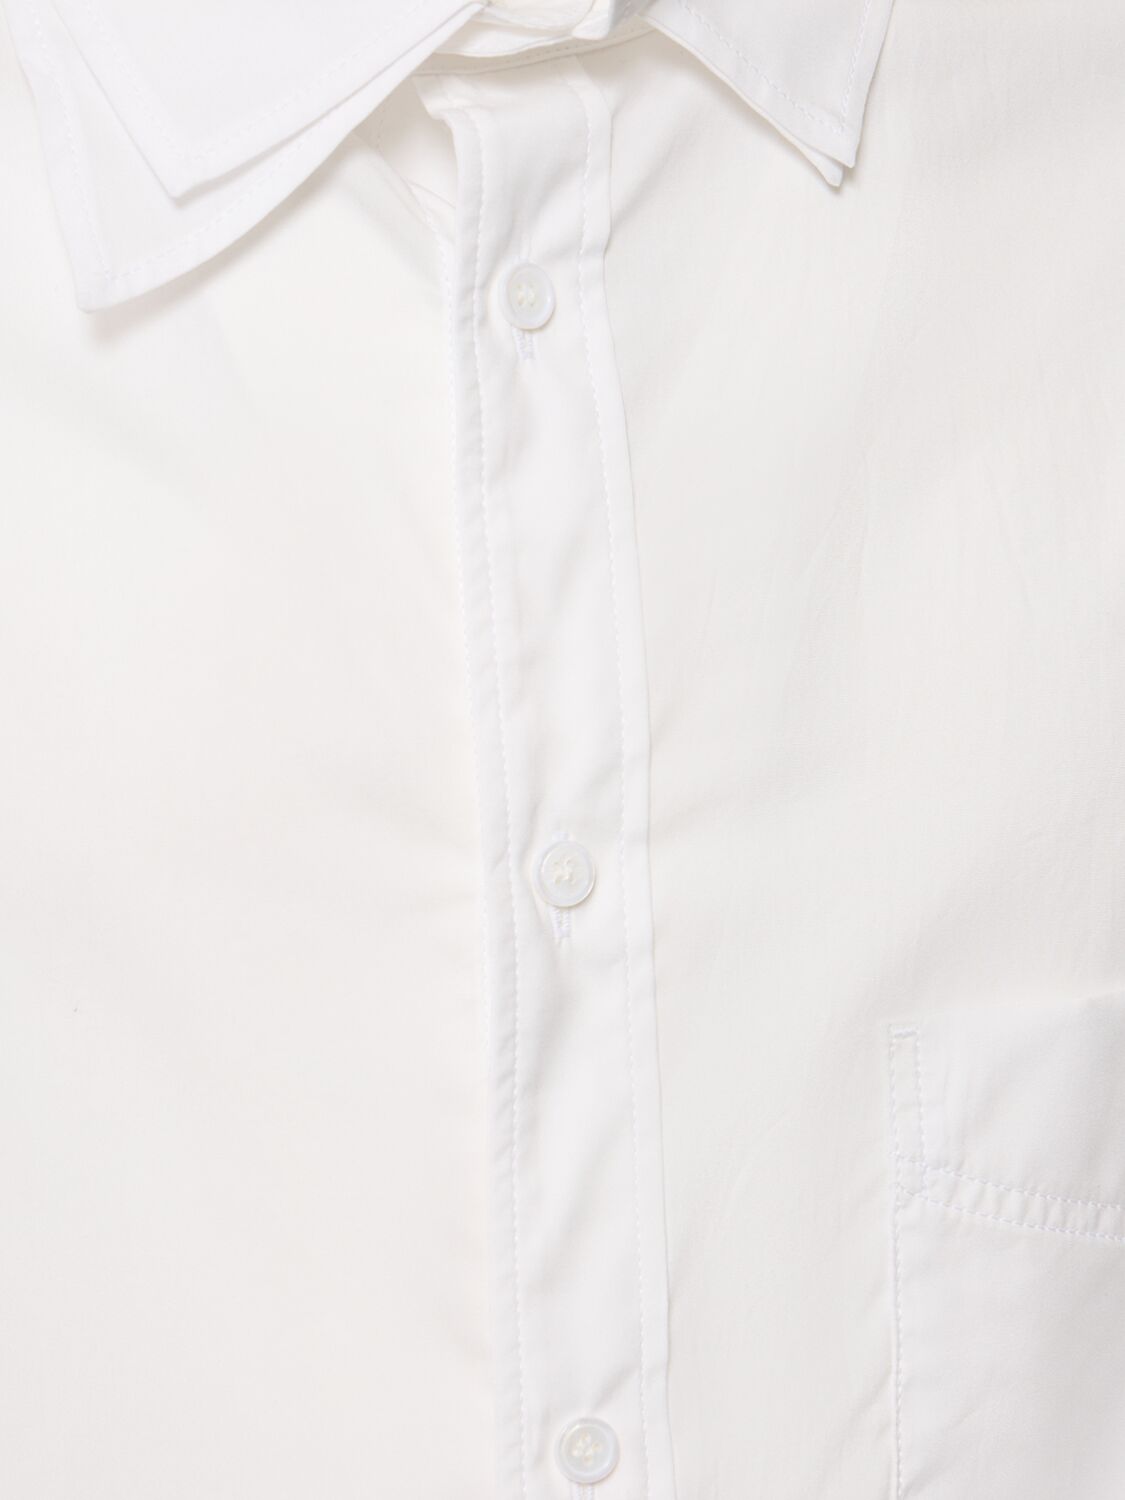 A-链针3层棉质衬衫